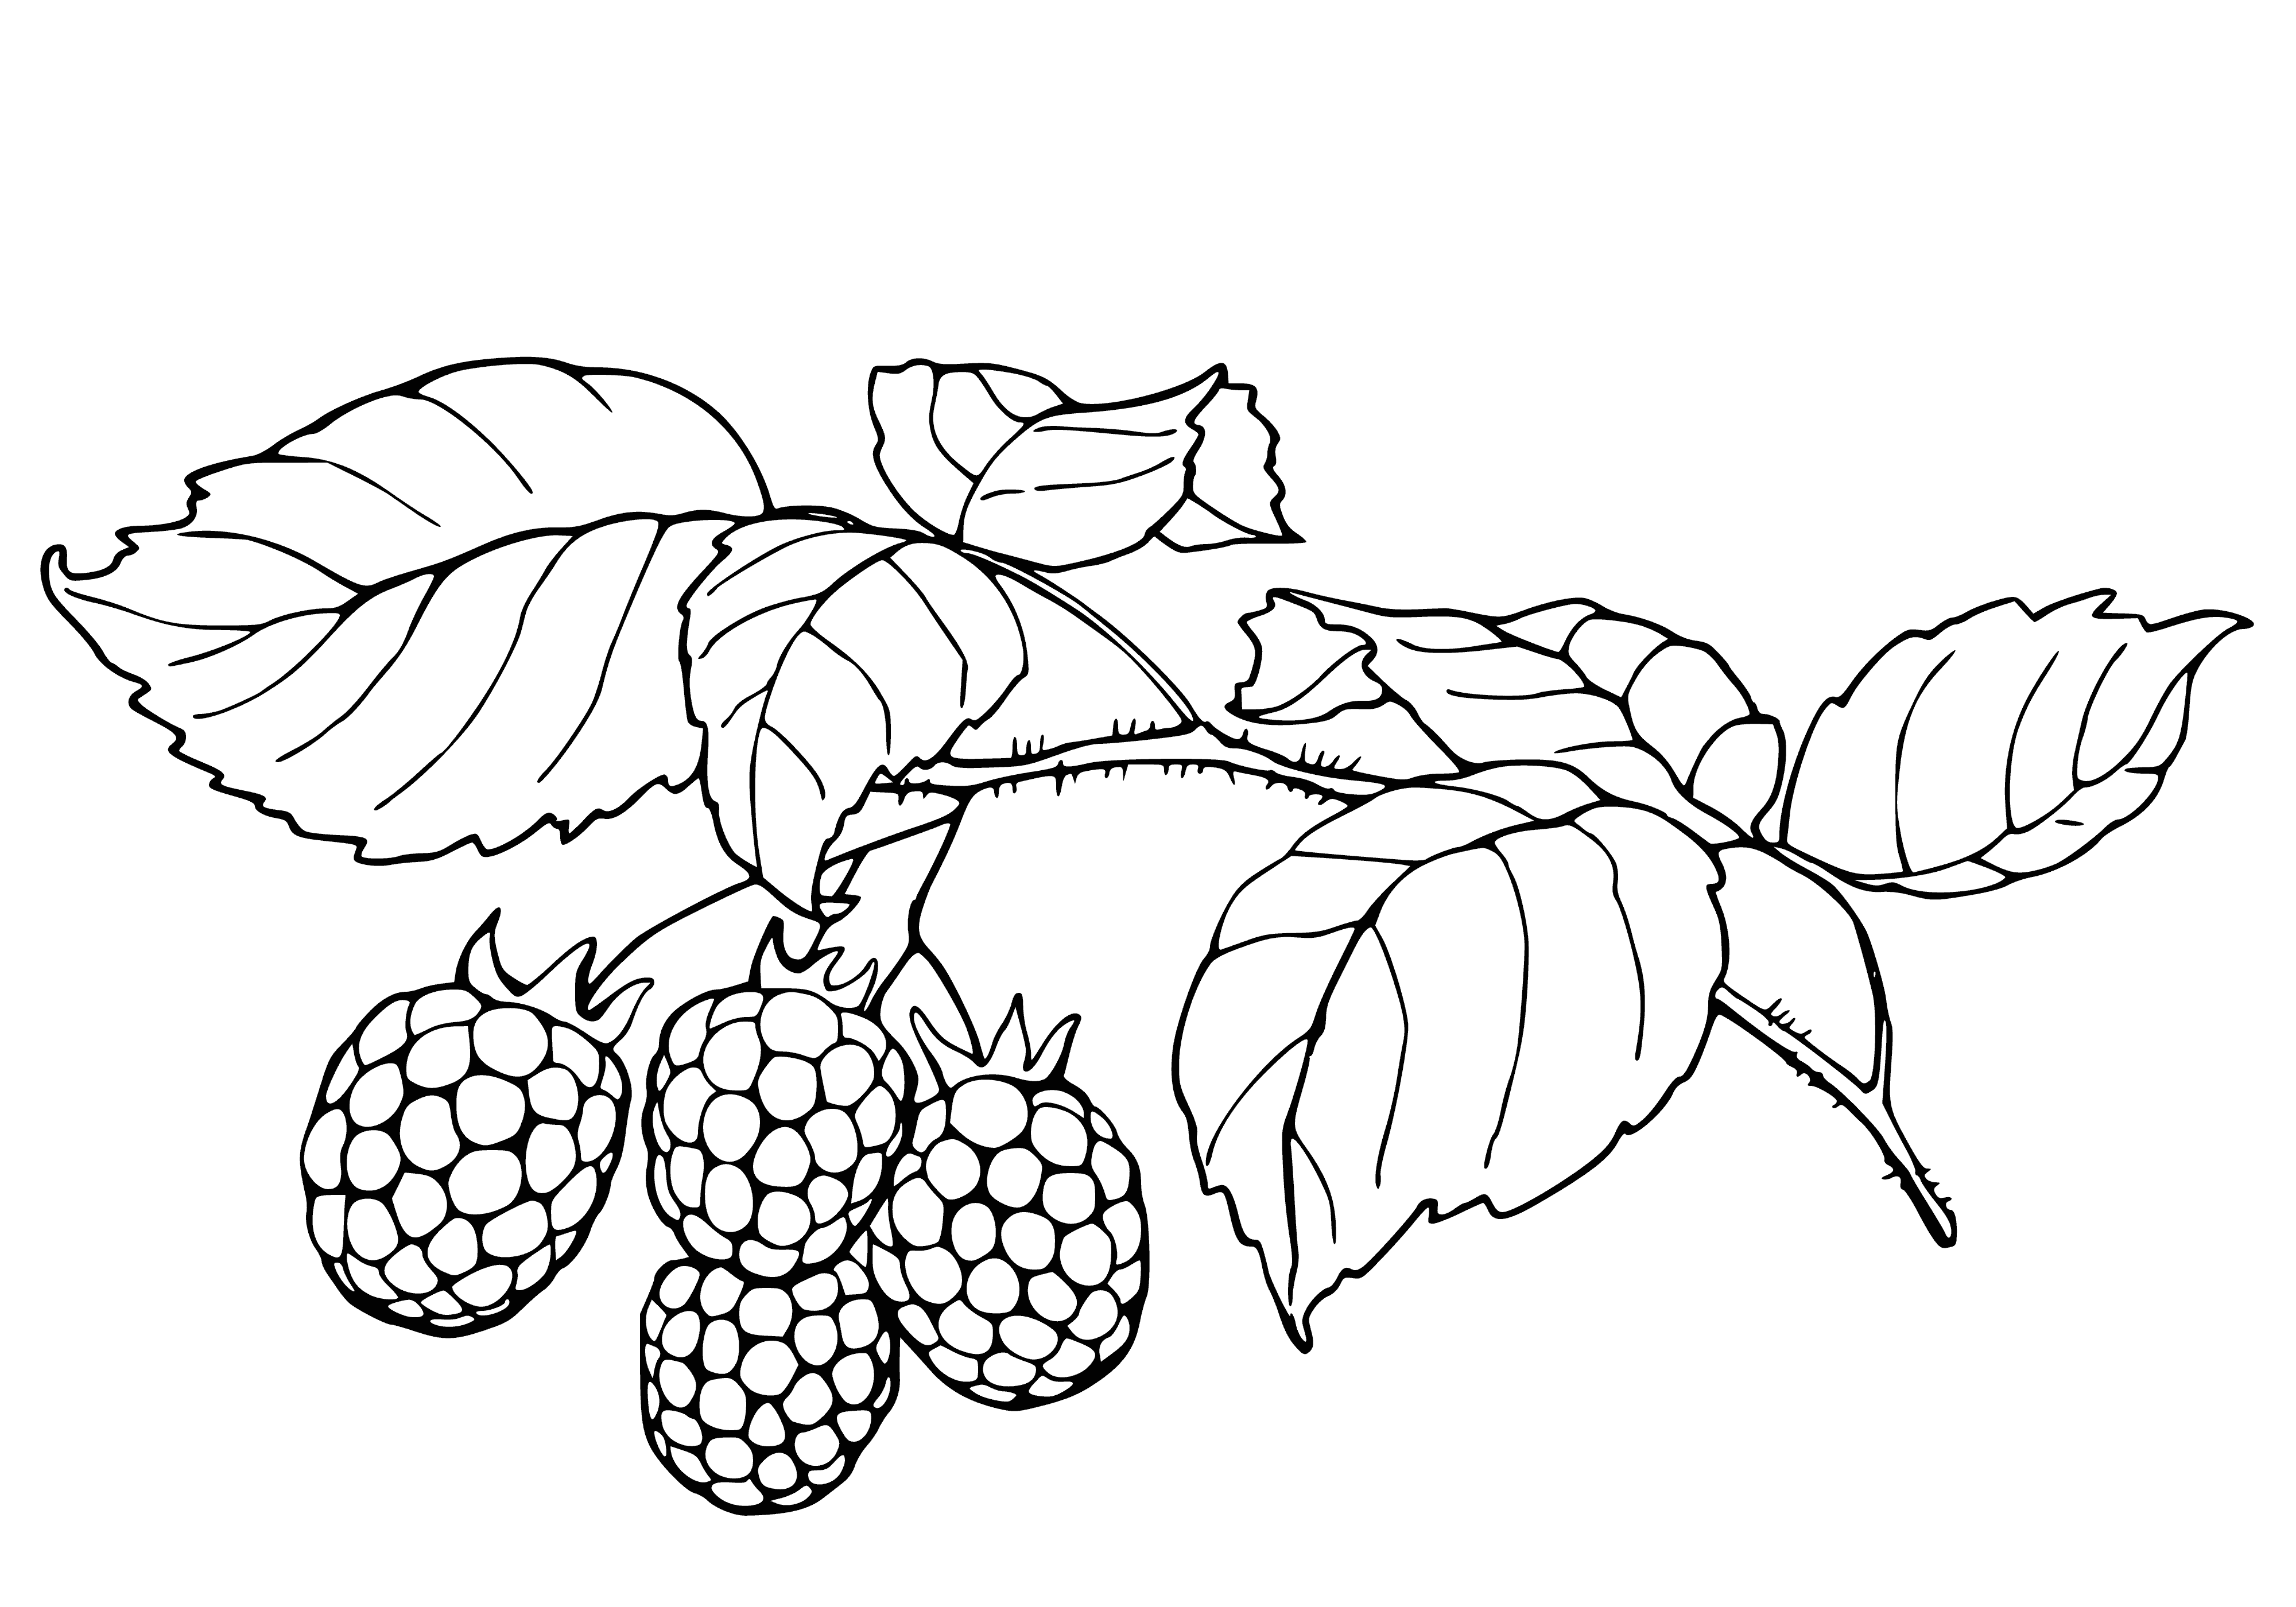 Raspberries coloring page